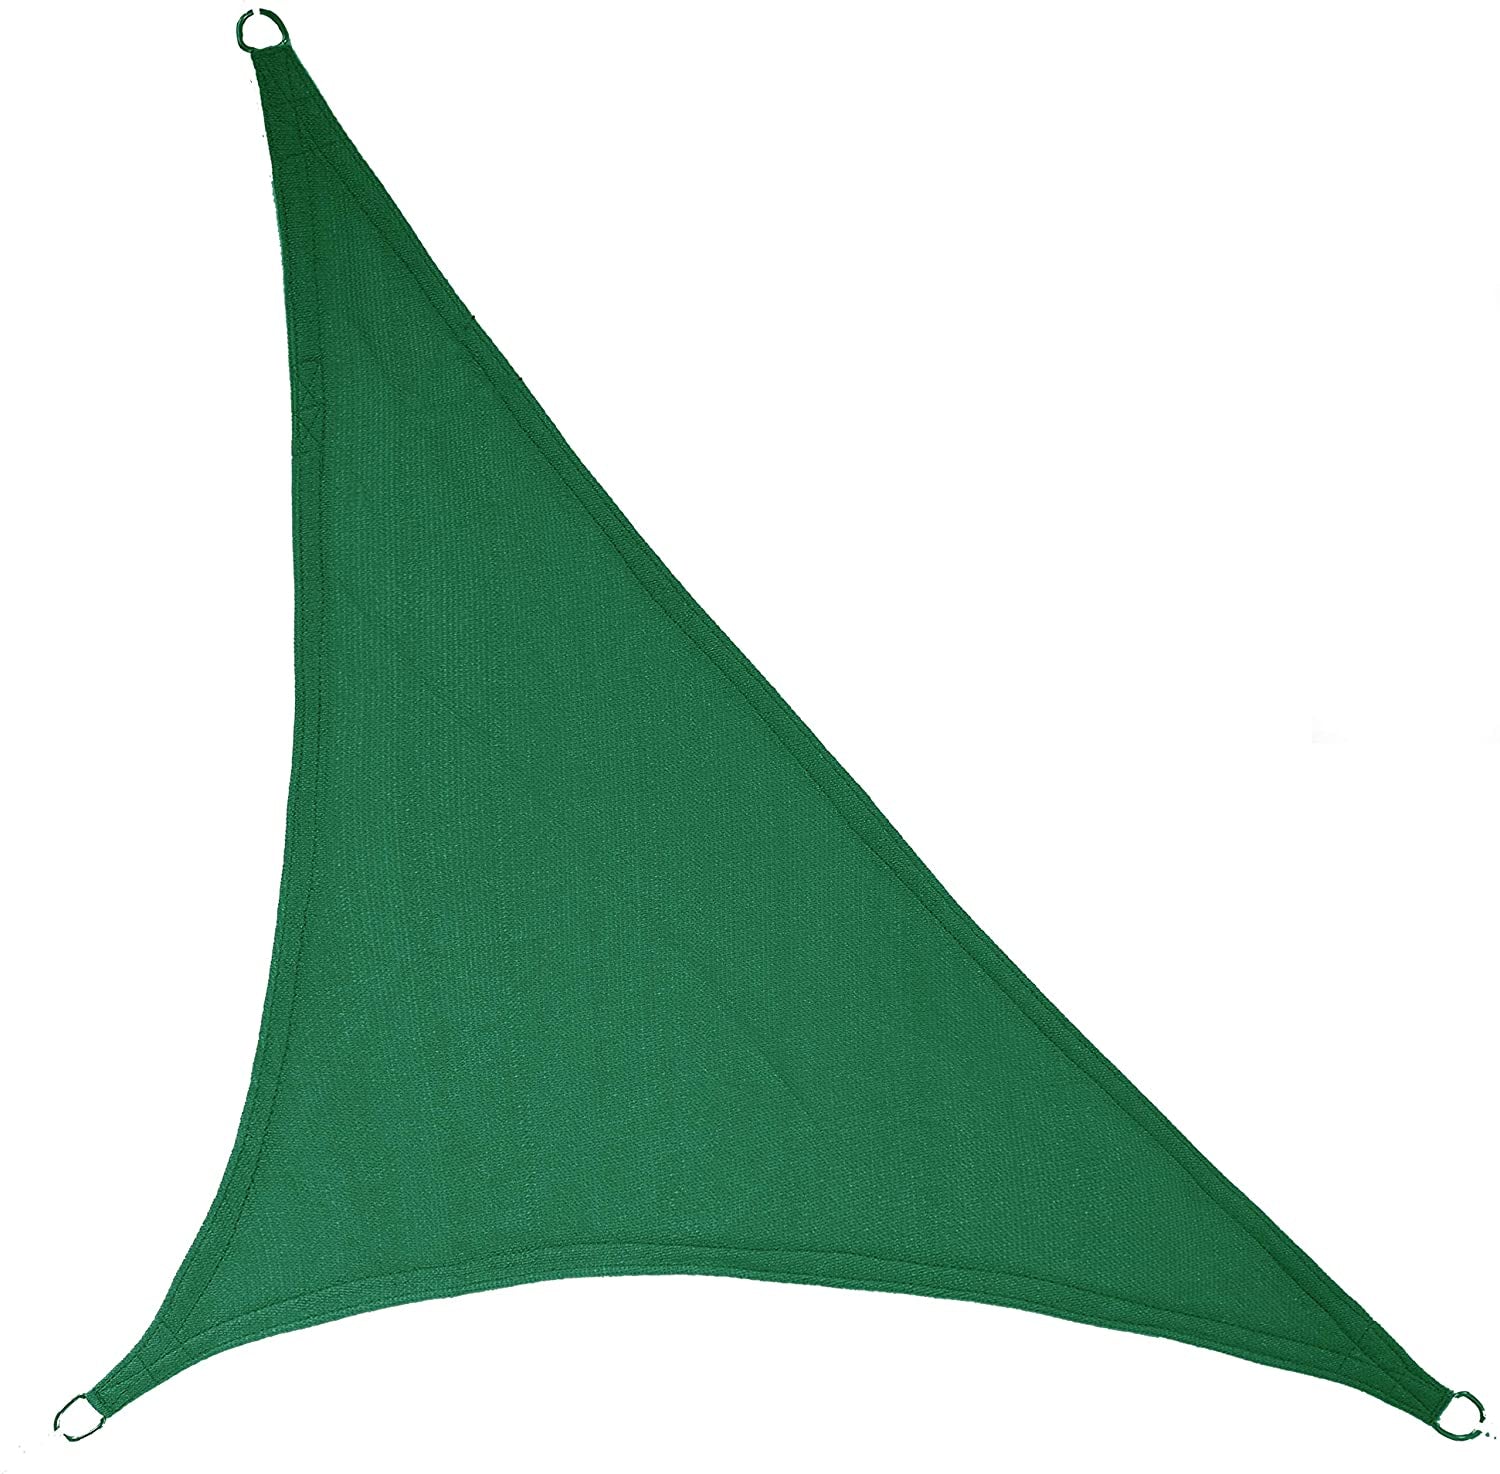 LyShade, Lyshade 12' X 12' X 17' Right Triangle Sun Shade Sail Canopy (Dark Green) - UV Block for Patio and Outdoor